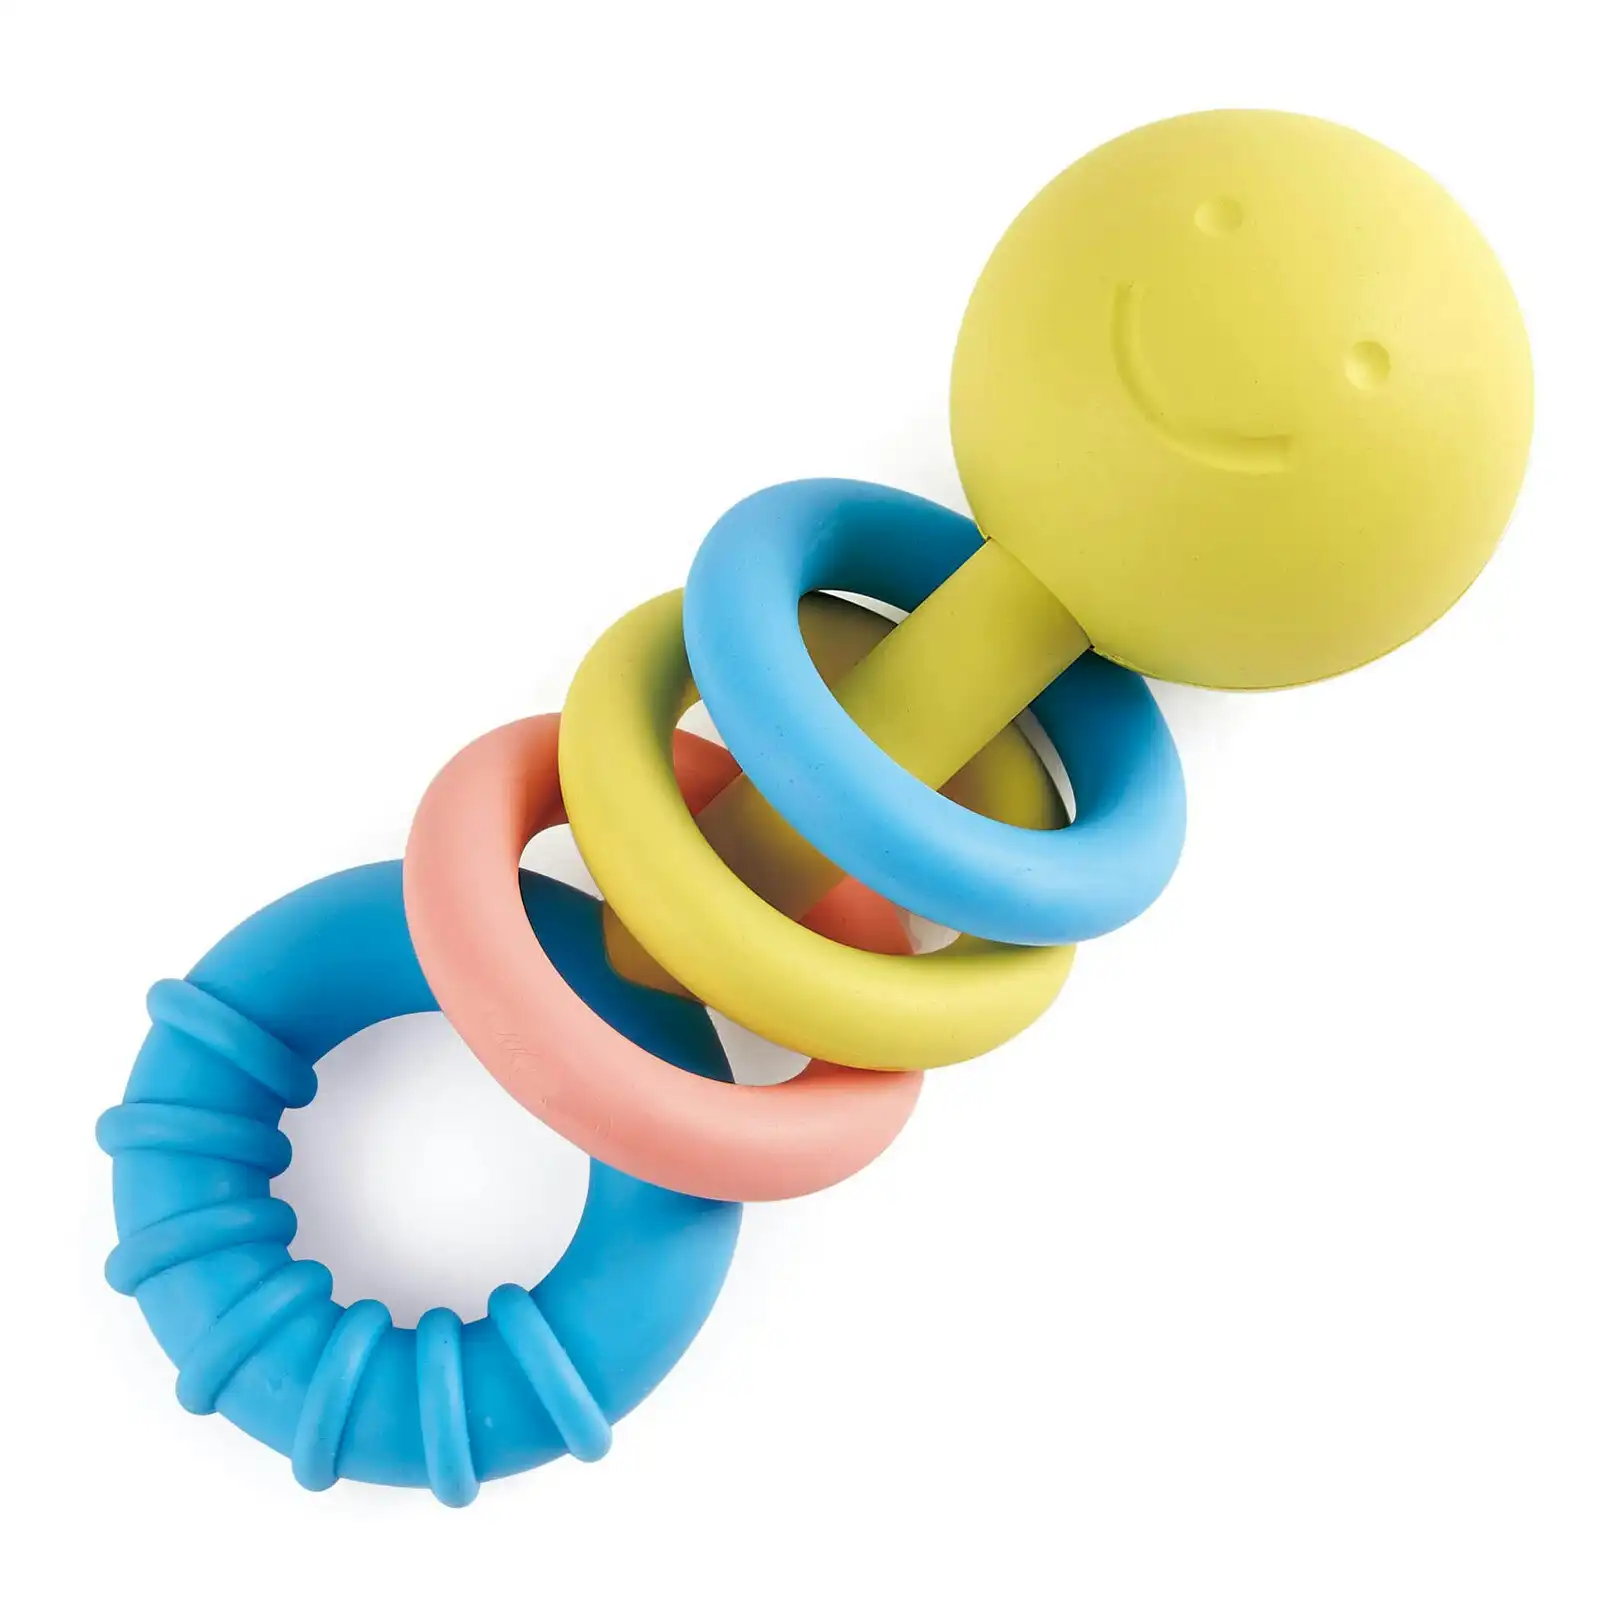 Hape Rattling Rings Teether/Teething/Rattle 13cm Toy for Baby/Kid/Infant 0m+